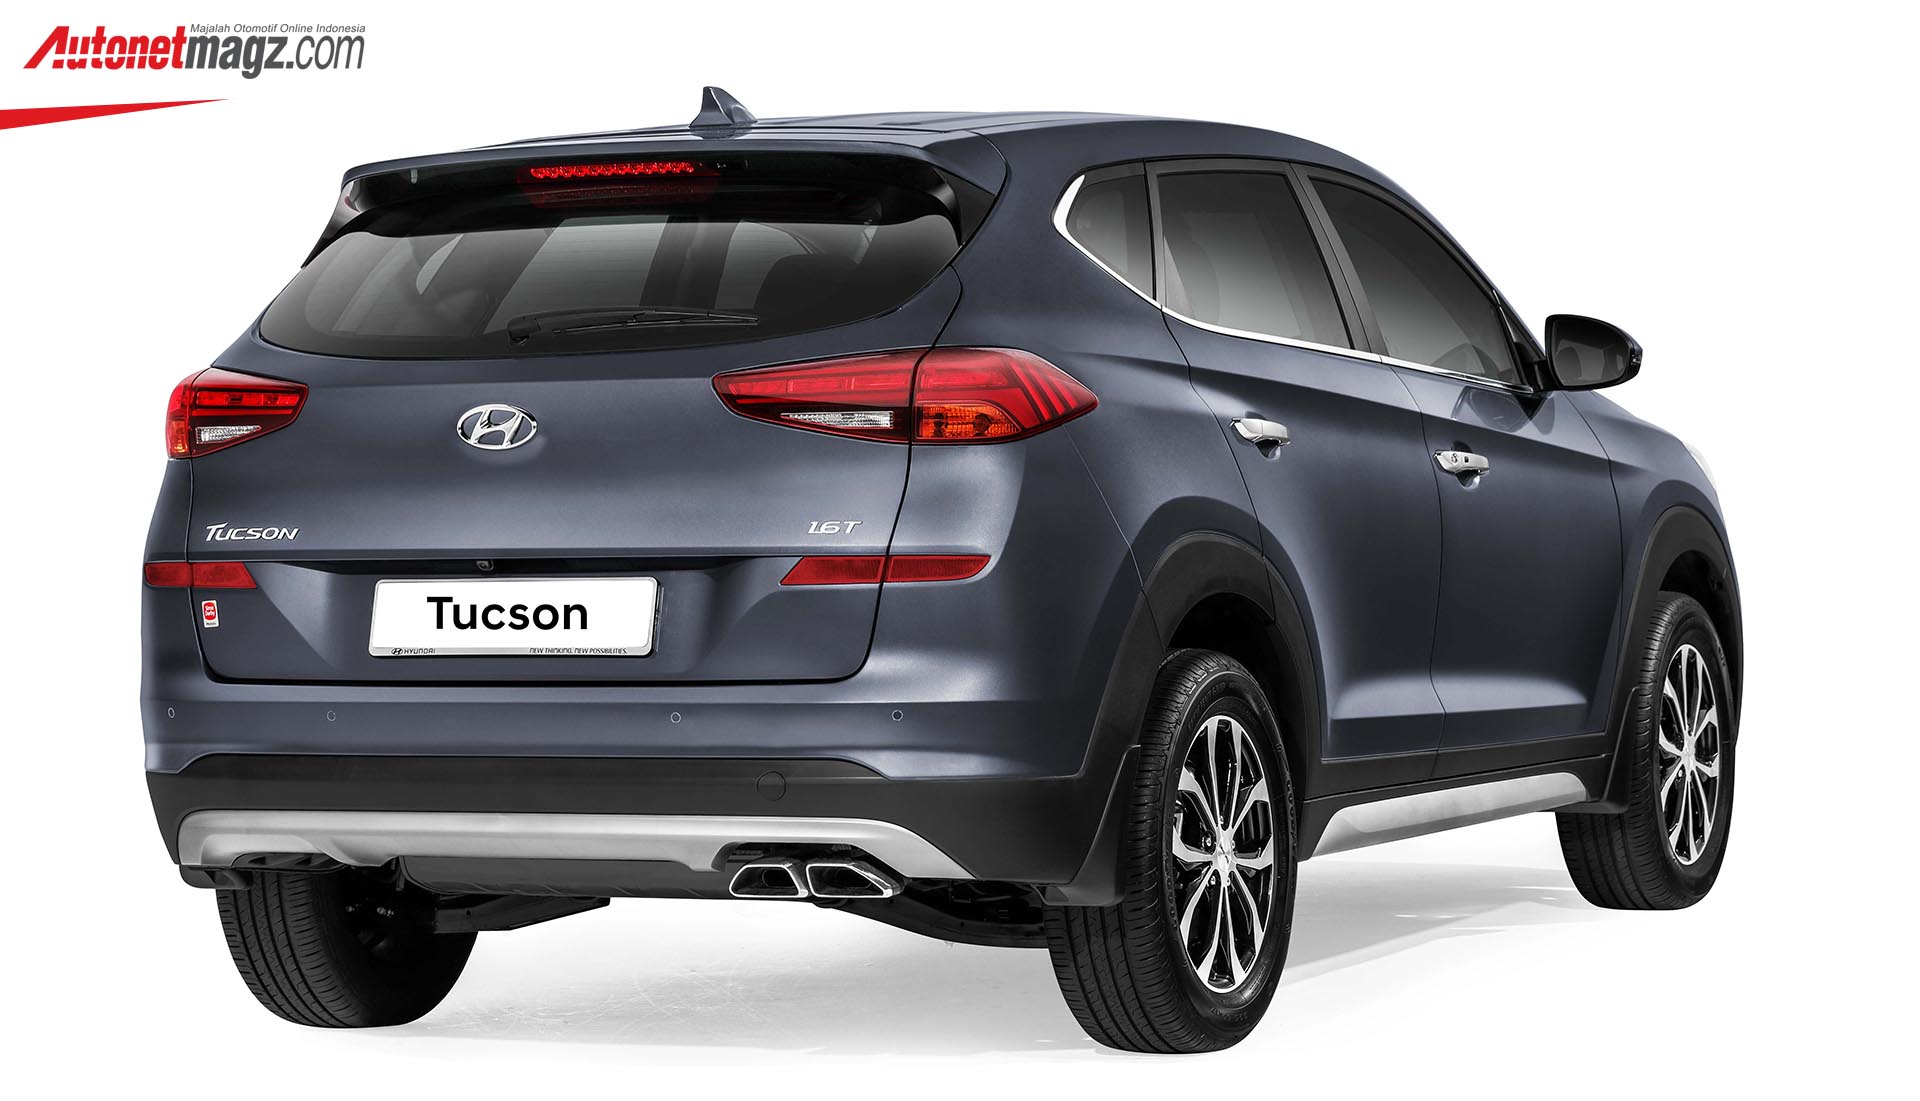 Berita, harga Hyundai Tucson Facelift: Hyundai Tucson Facelift Malaysia, Wajah Baru, Tambah Airbags & Sensor